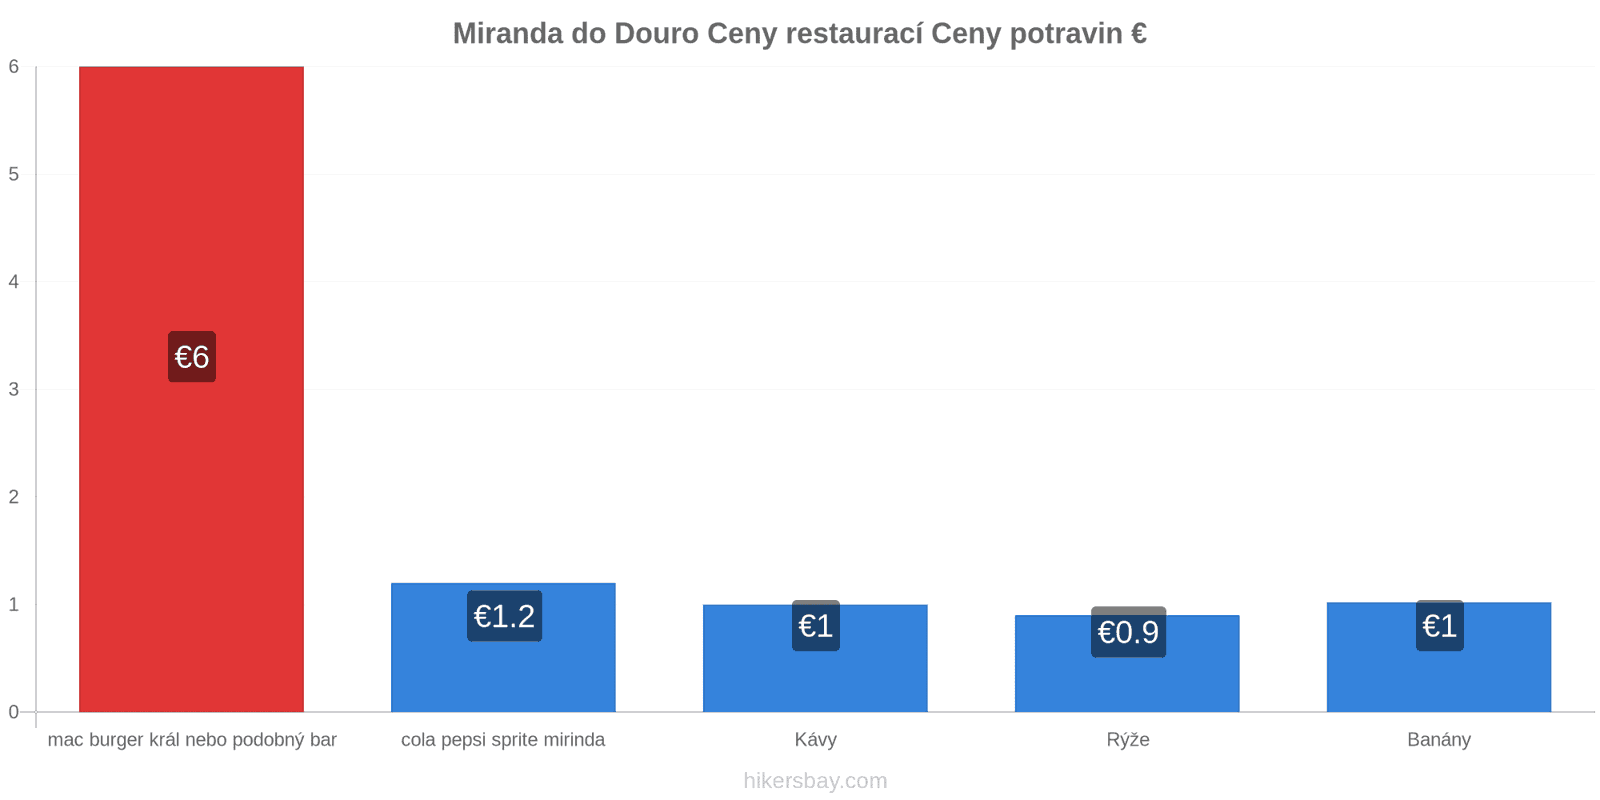 Miranda do Douro změny cen hikersbay.com